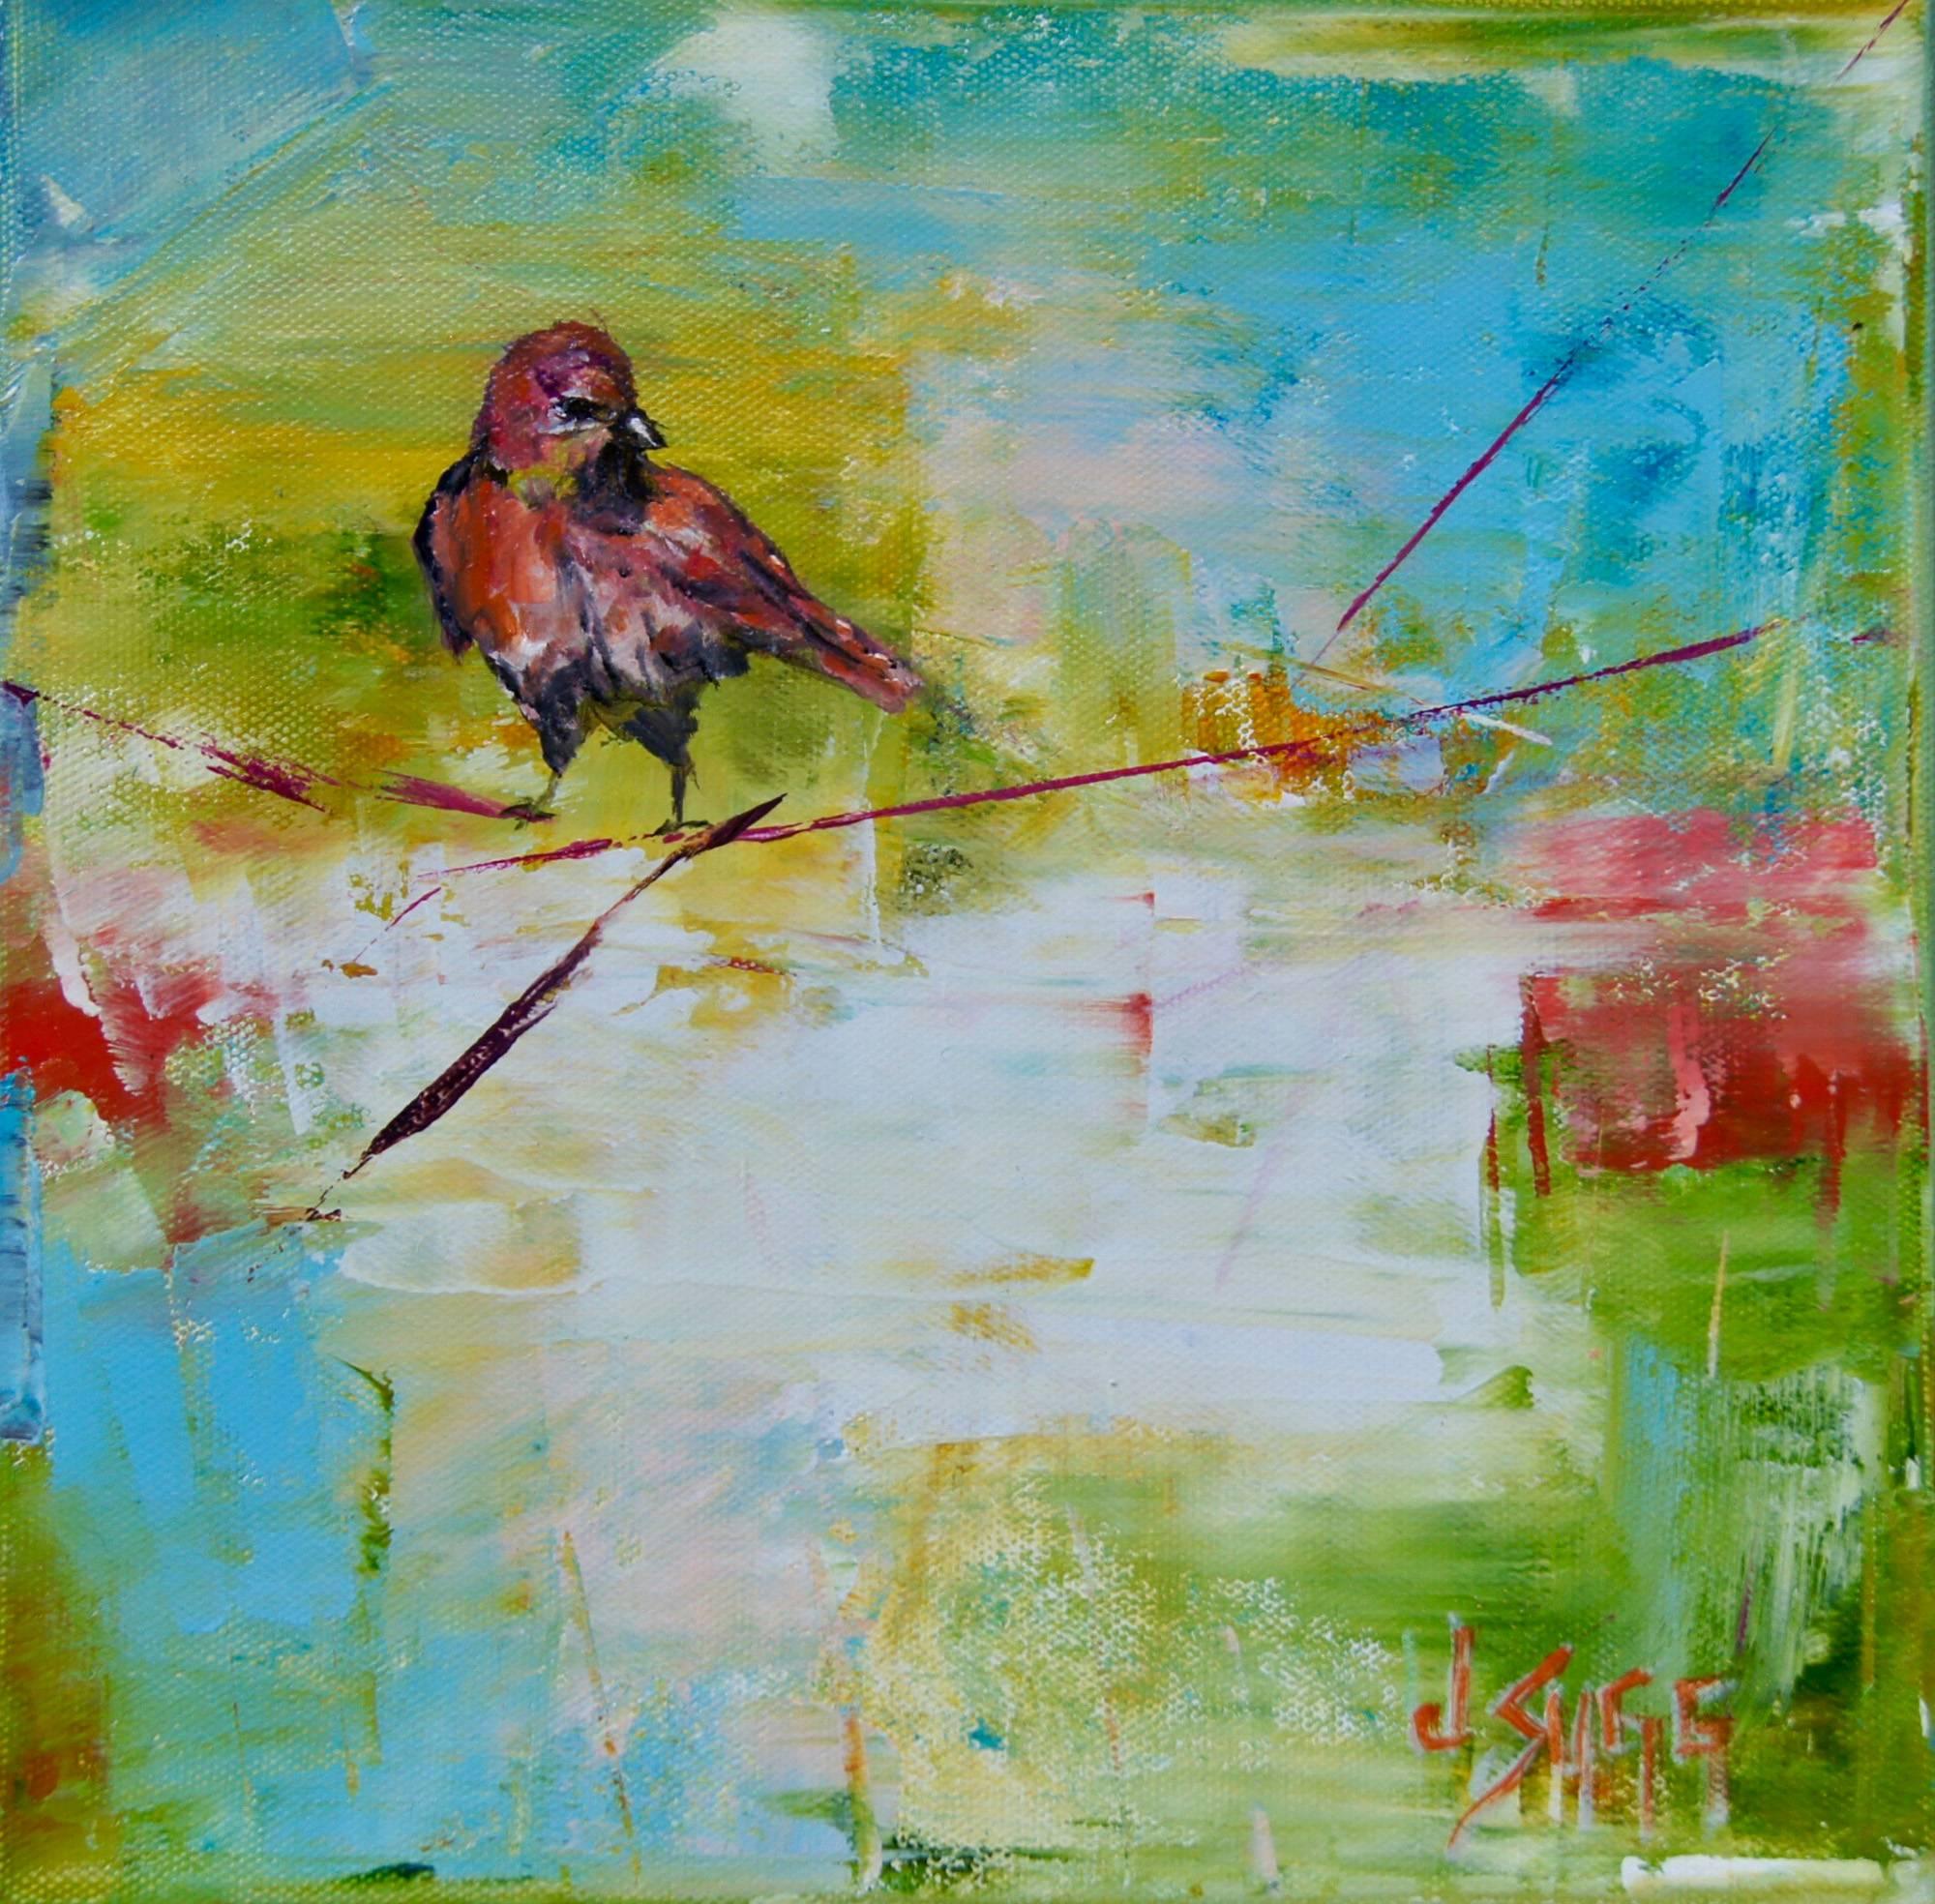 Janice Sugg Animal Painting - Abstract Bird Painting 'Red Bird at Dawn' Urban Wildlife Art, Contemporary Art